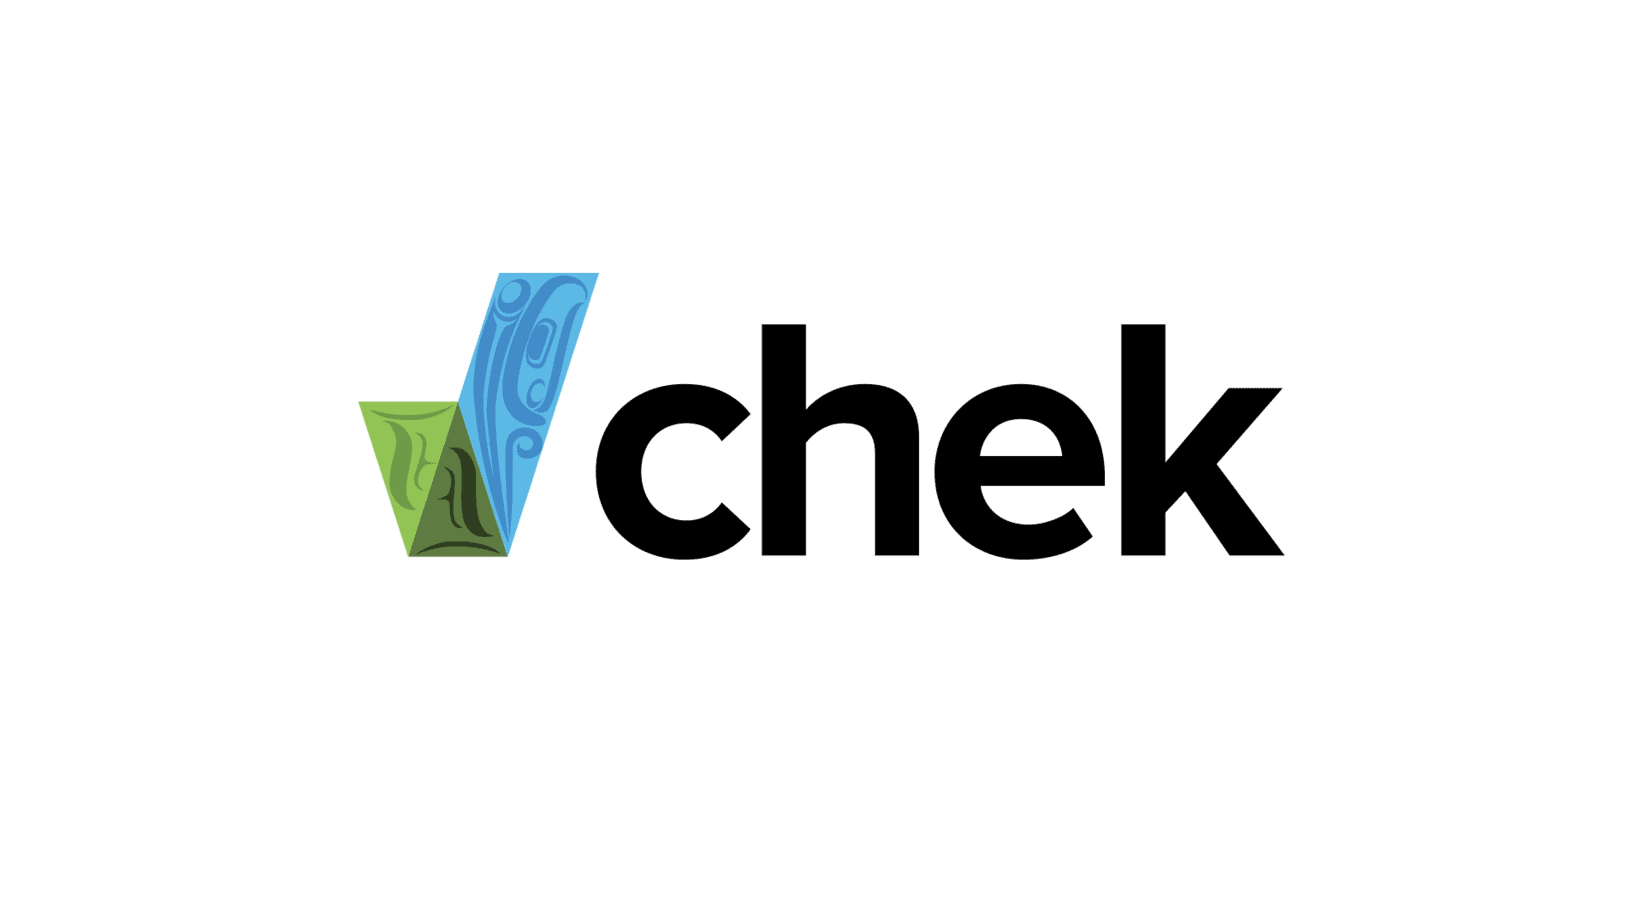 CHEK First Nations logo blk